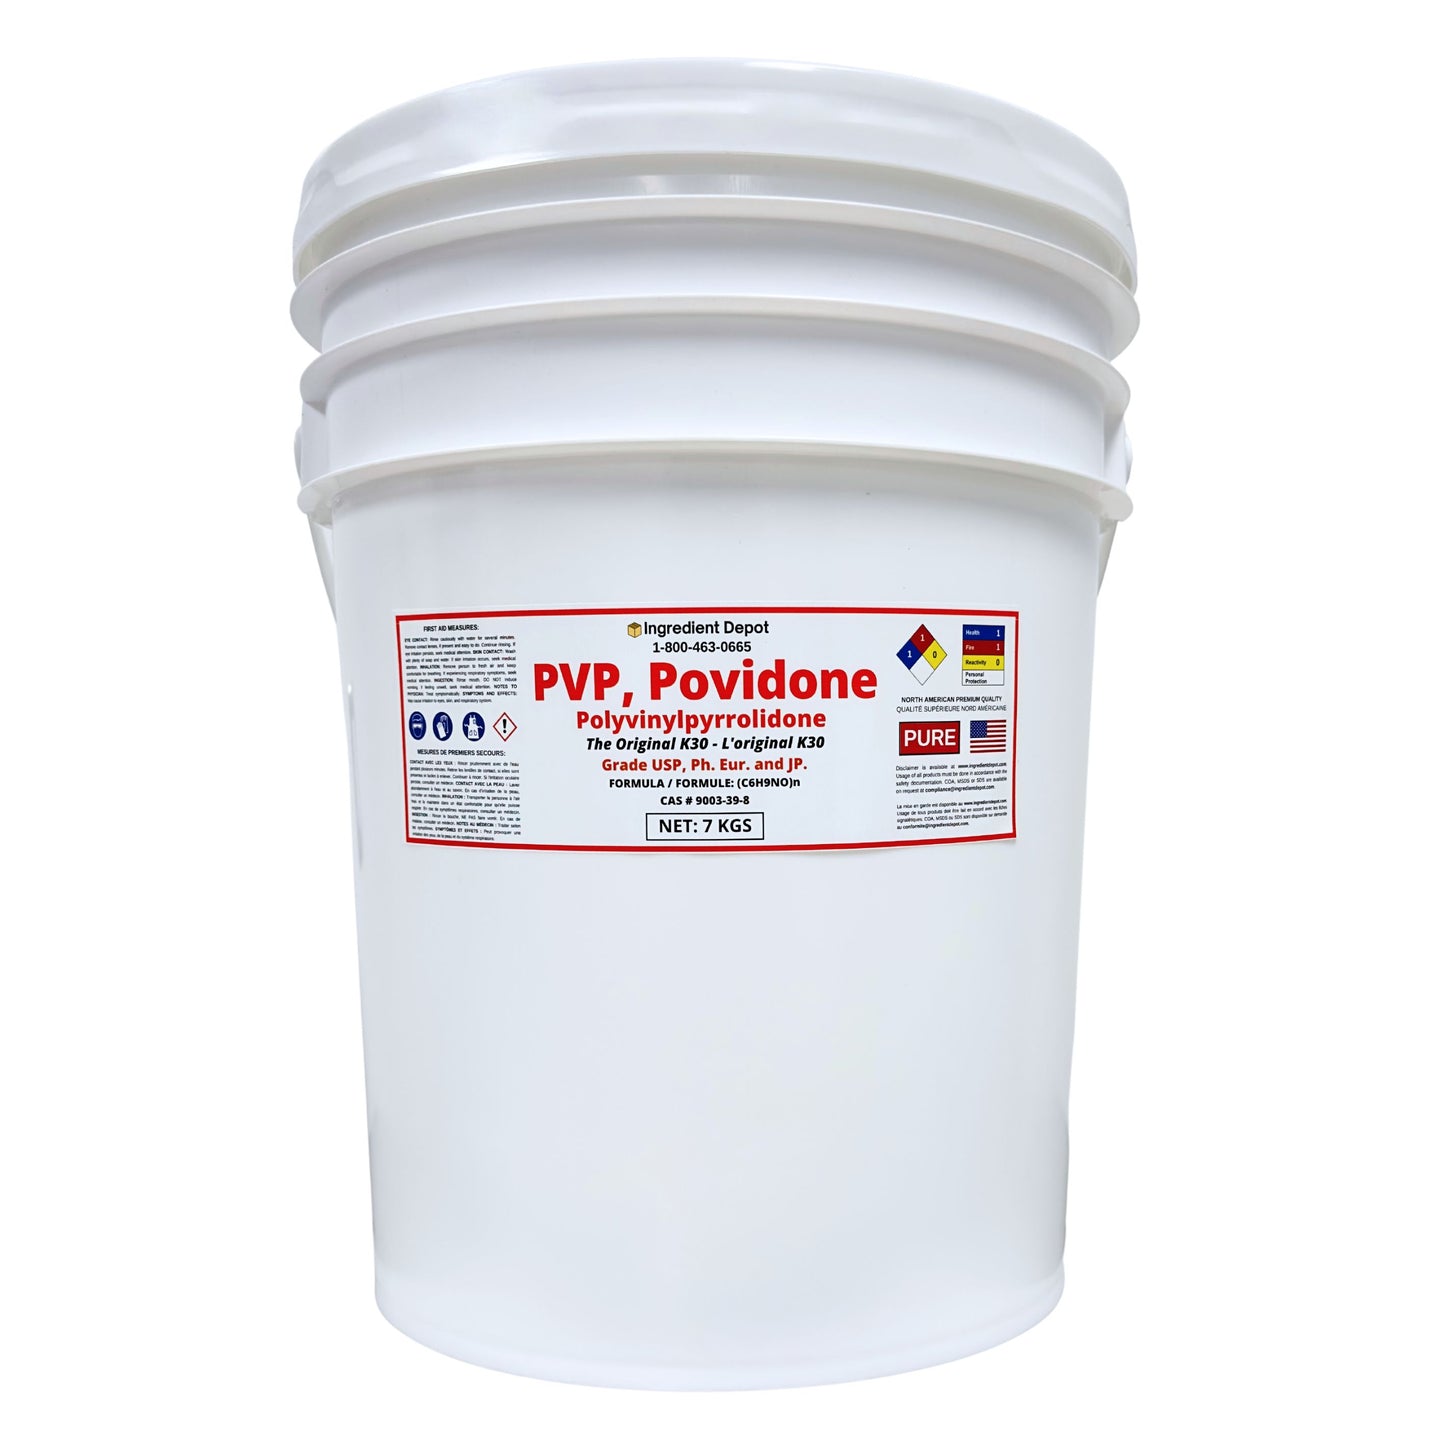 PVP Original K30, Povidone, Polyvinylpyrrolidone 7 kgs - IngredientDepot.com